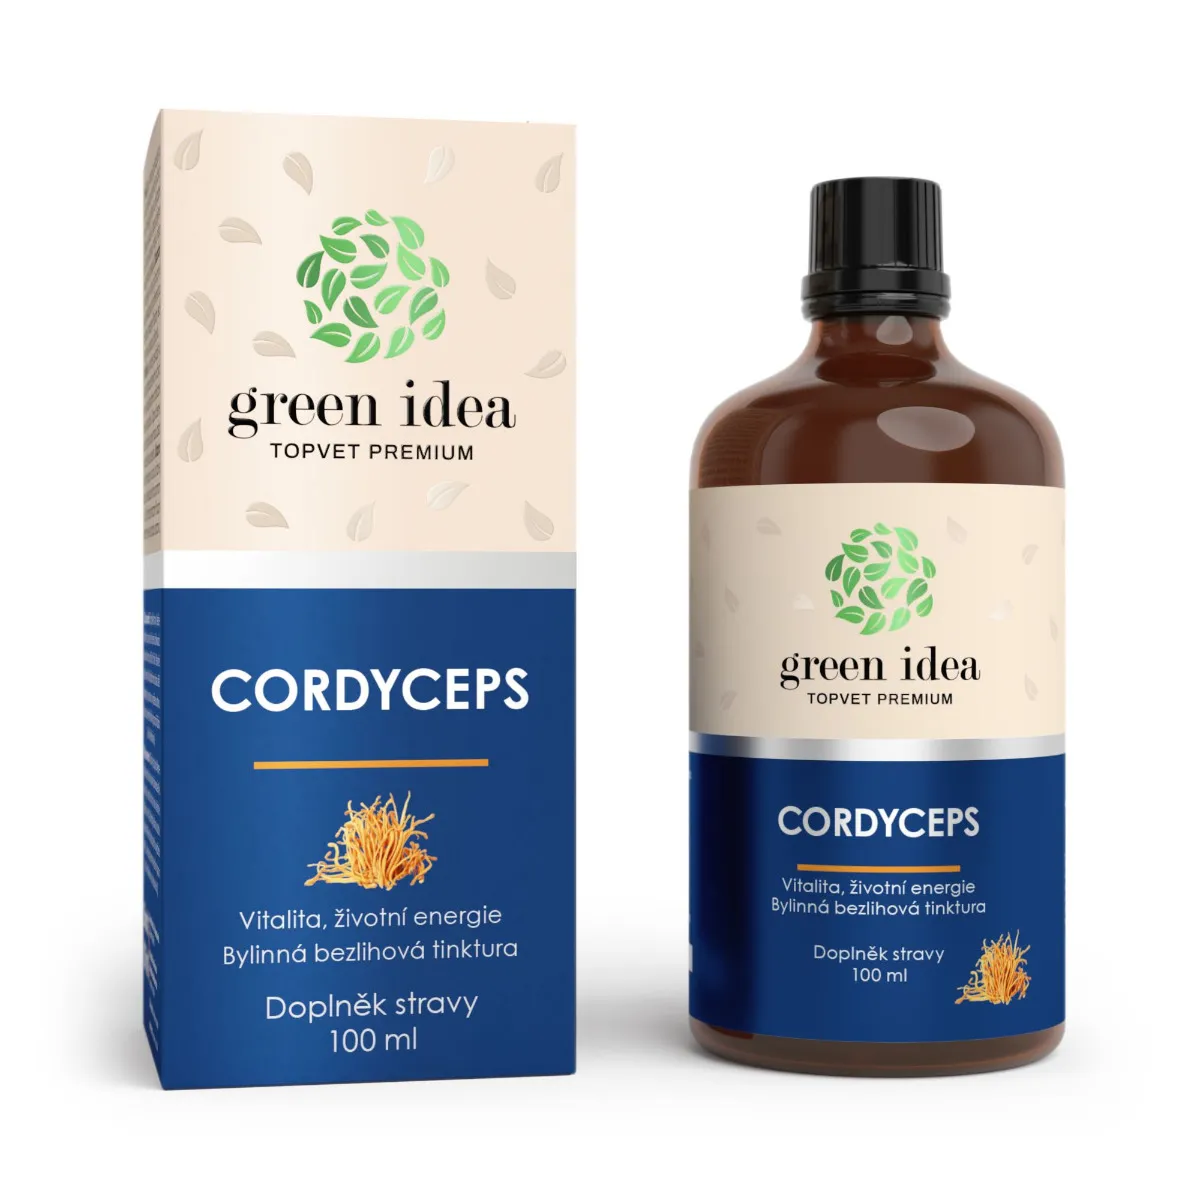 Green idea Cordyceps